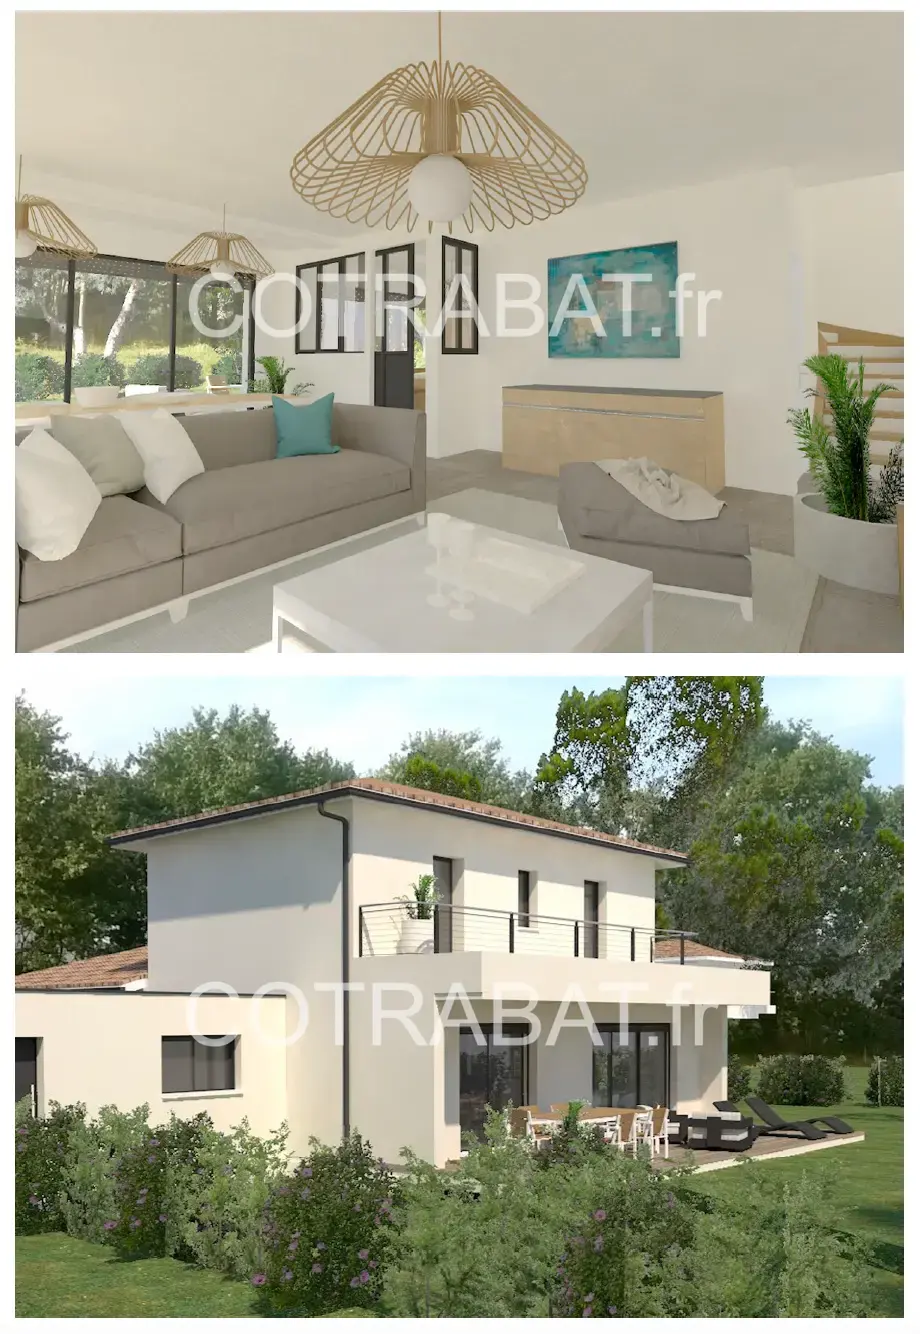 Plan 3D villa Carignan